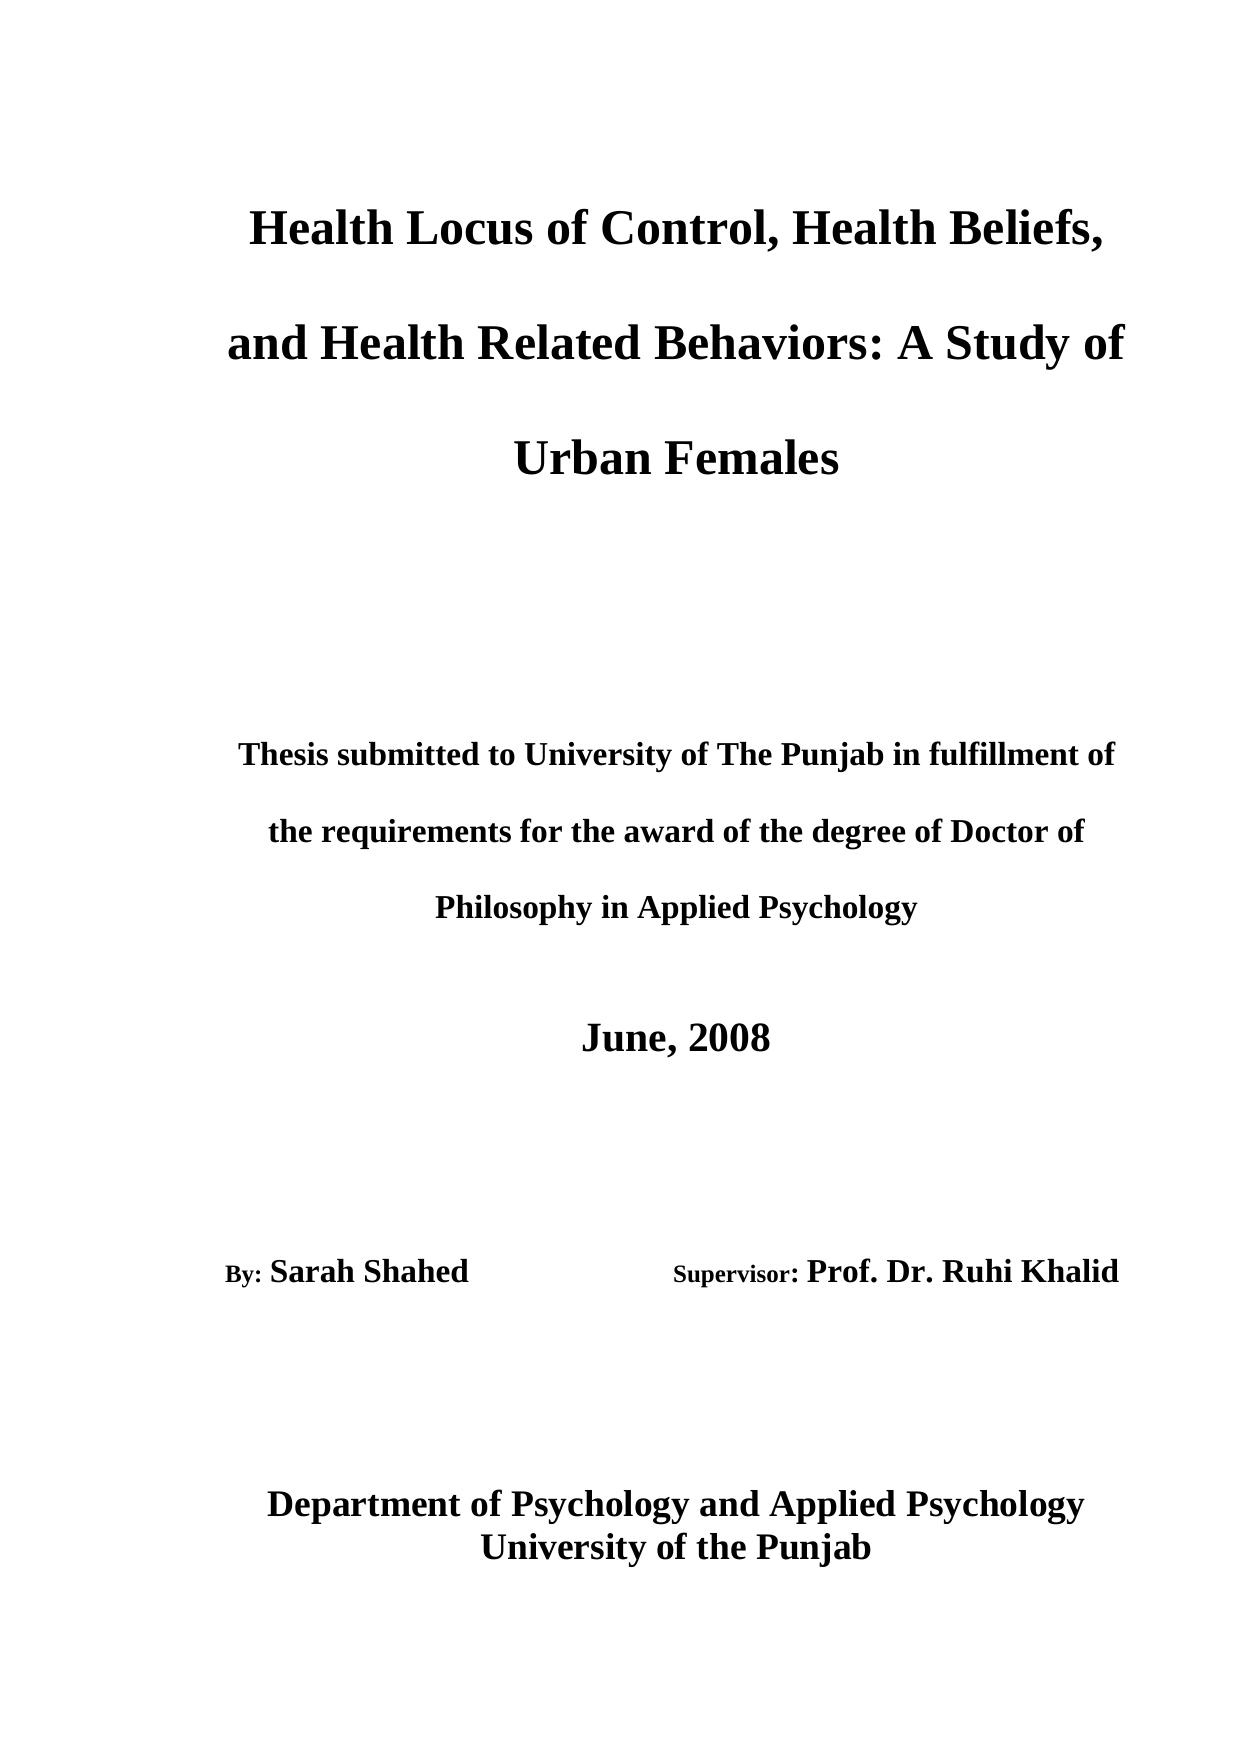 Microsoft Word - sarah shahed.thesis.roman numbered.pdf